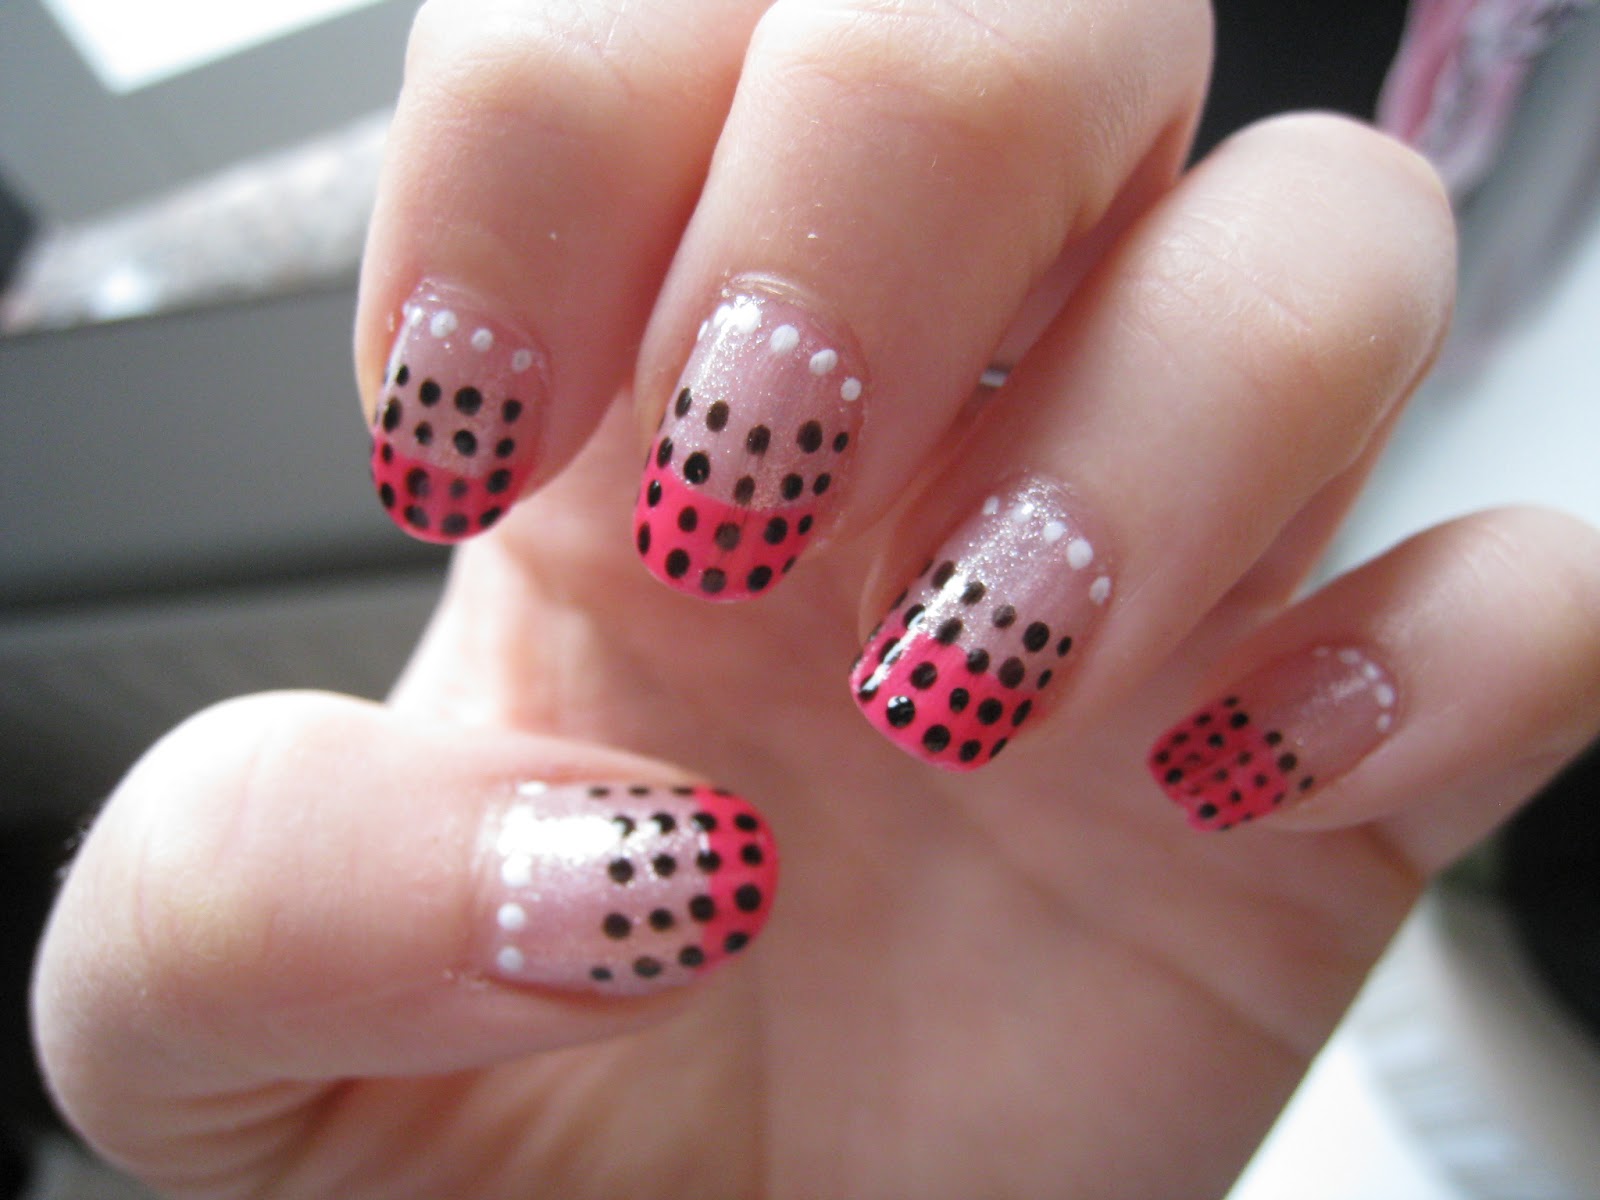 3. Glitter Pink Tip Nails - wide 3